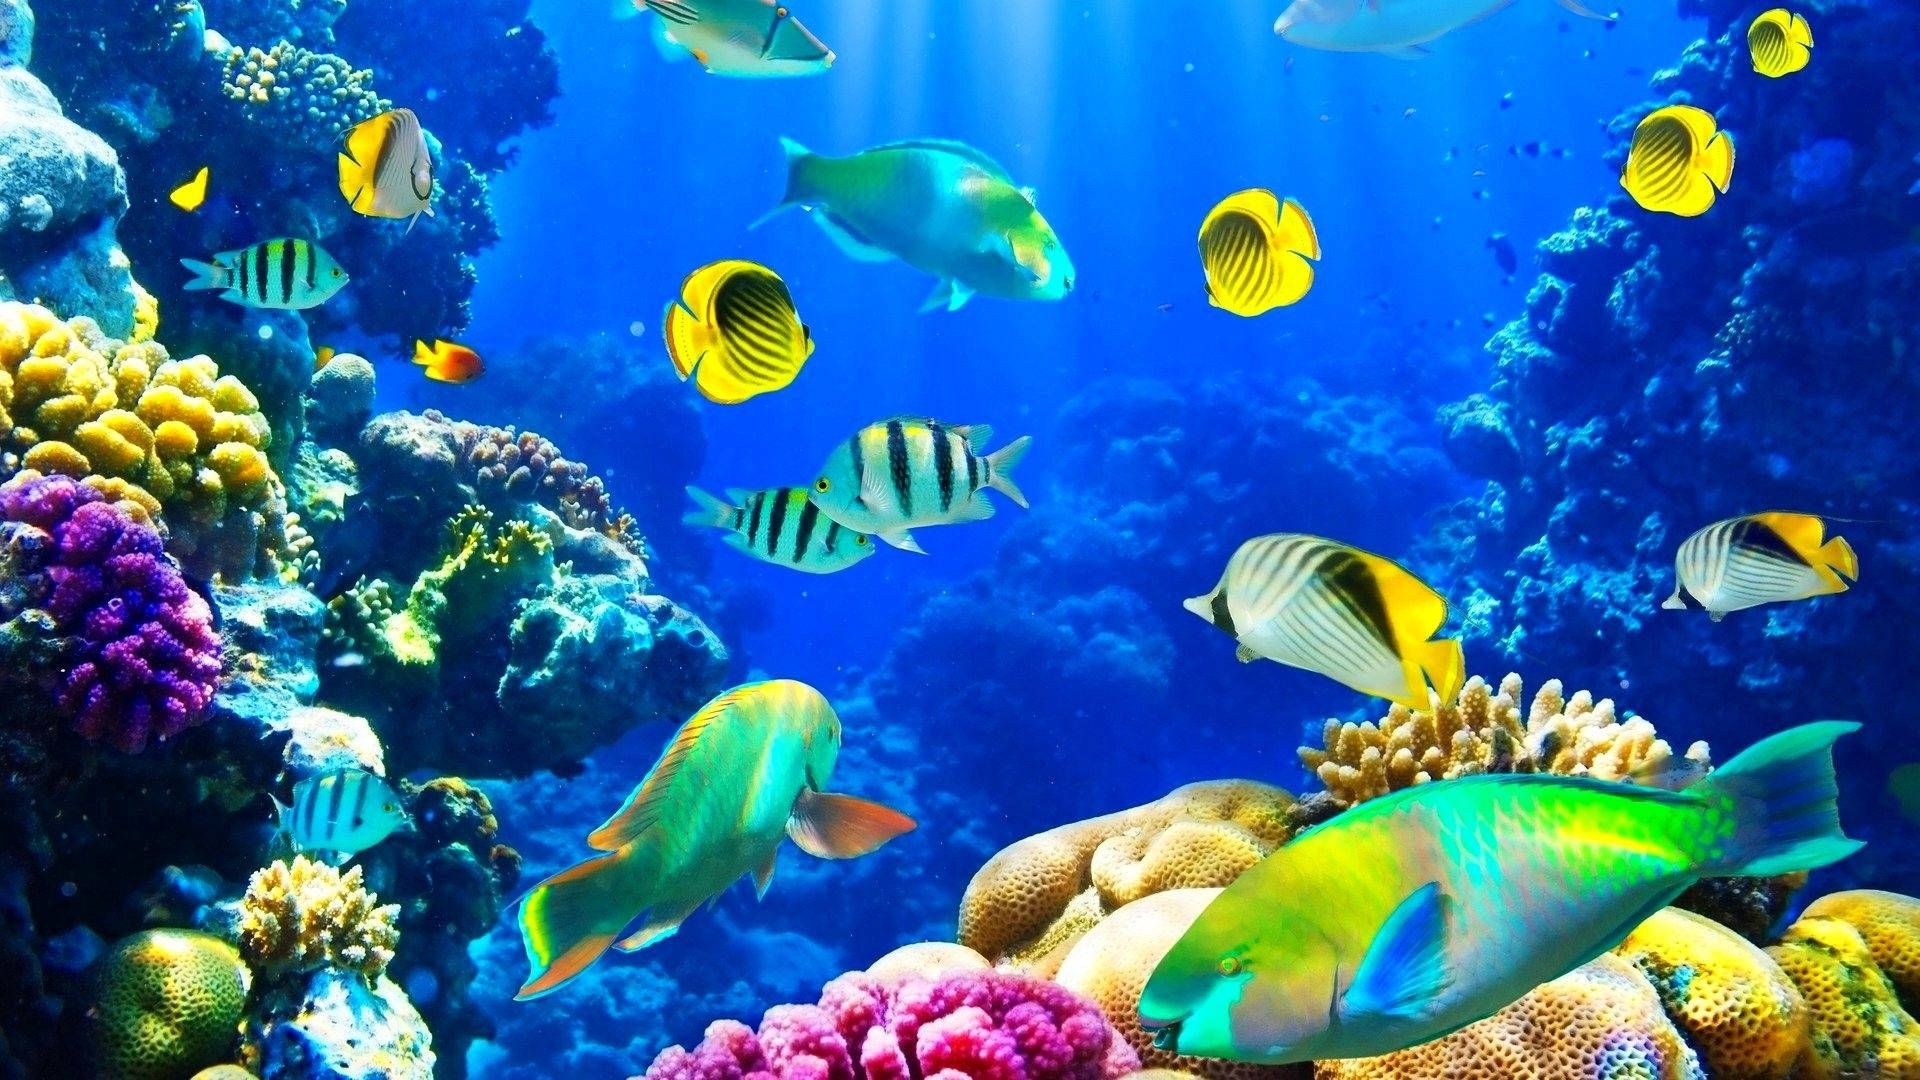 Free Underwater Wallpaper Downloads, Underwater Wallpaper for FREE